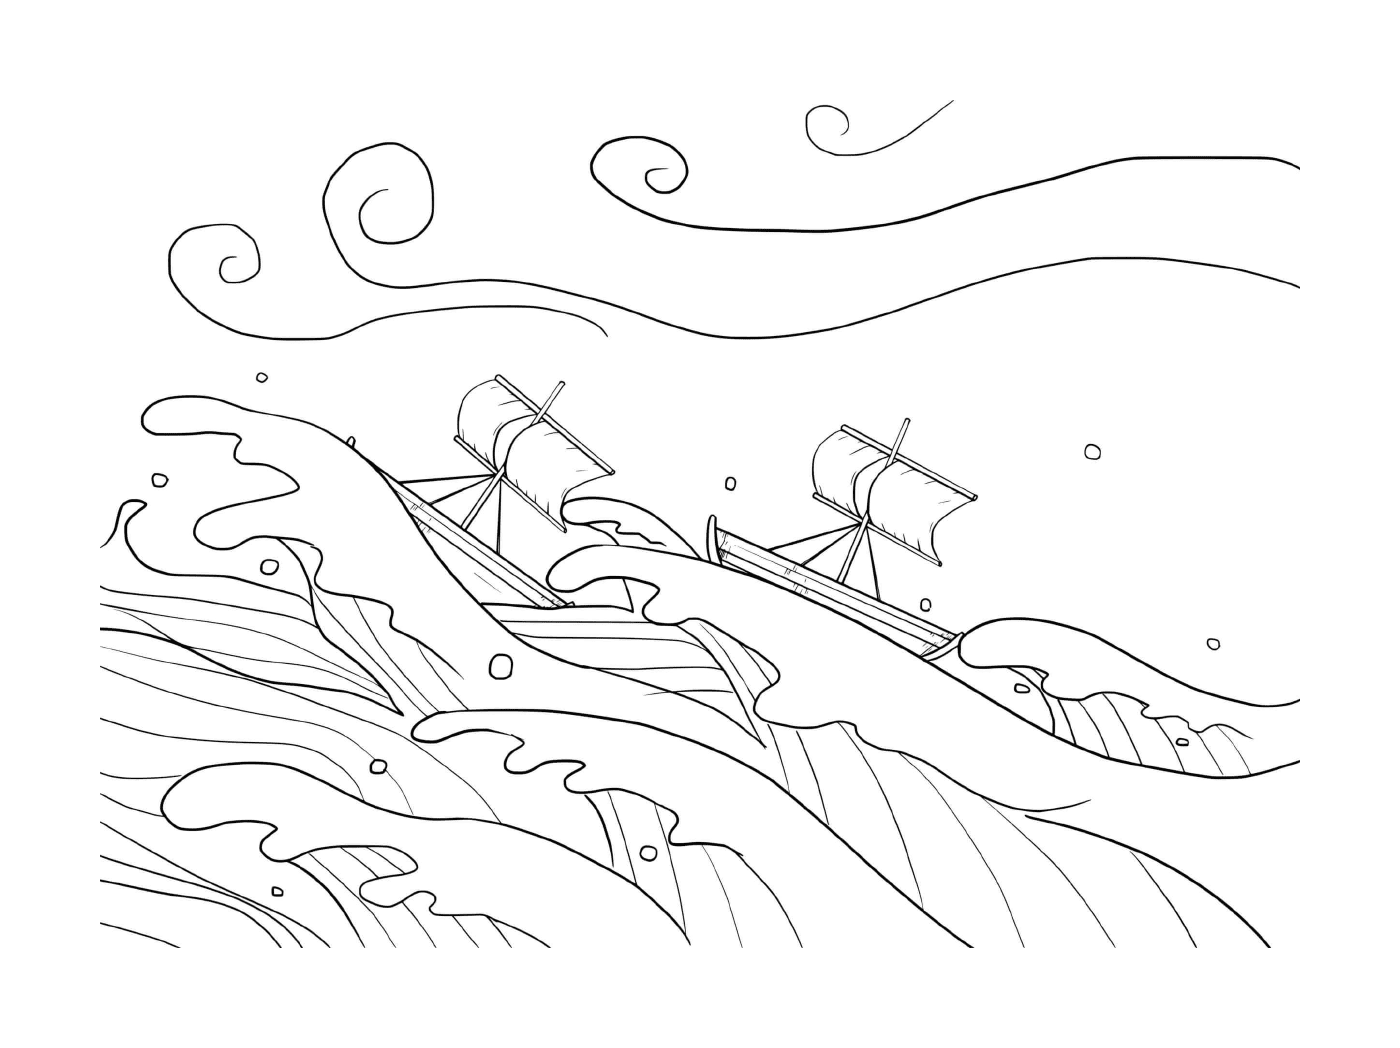  Boat in the ocean 